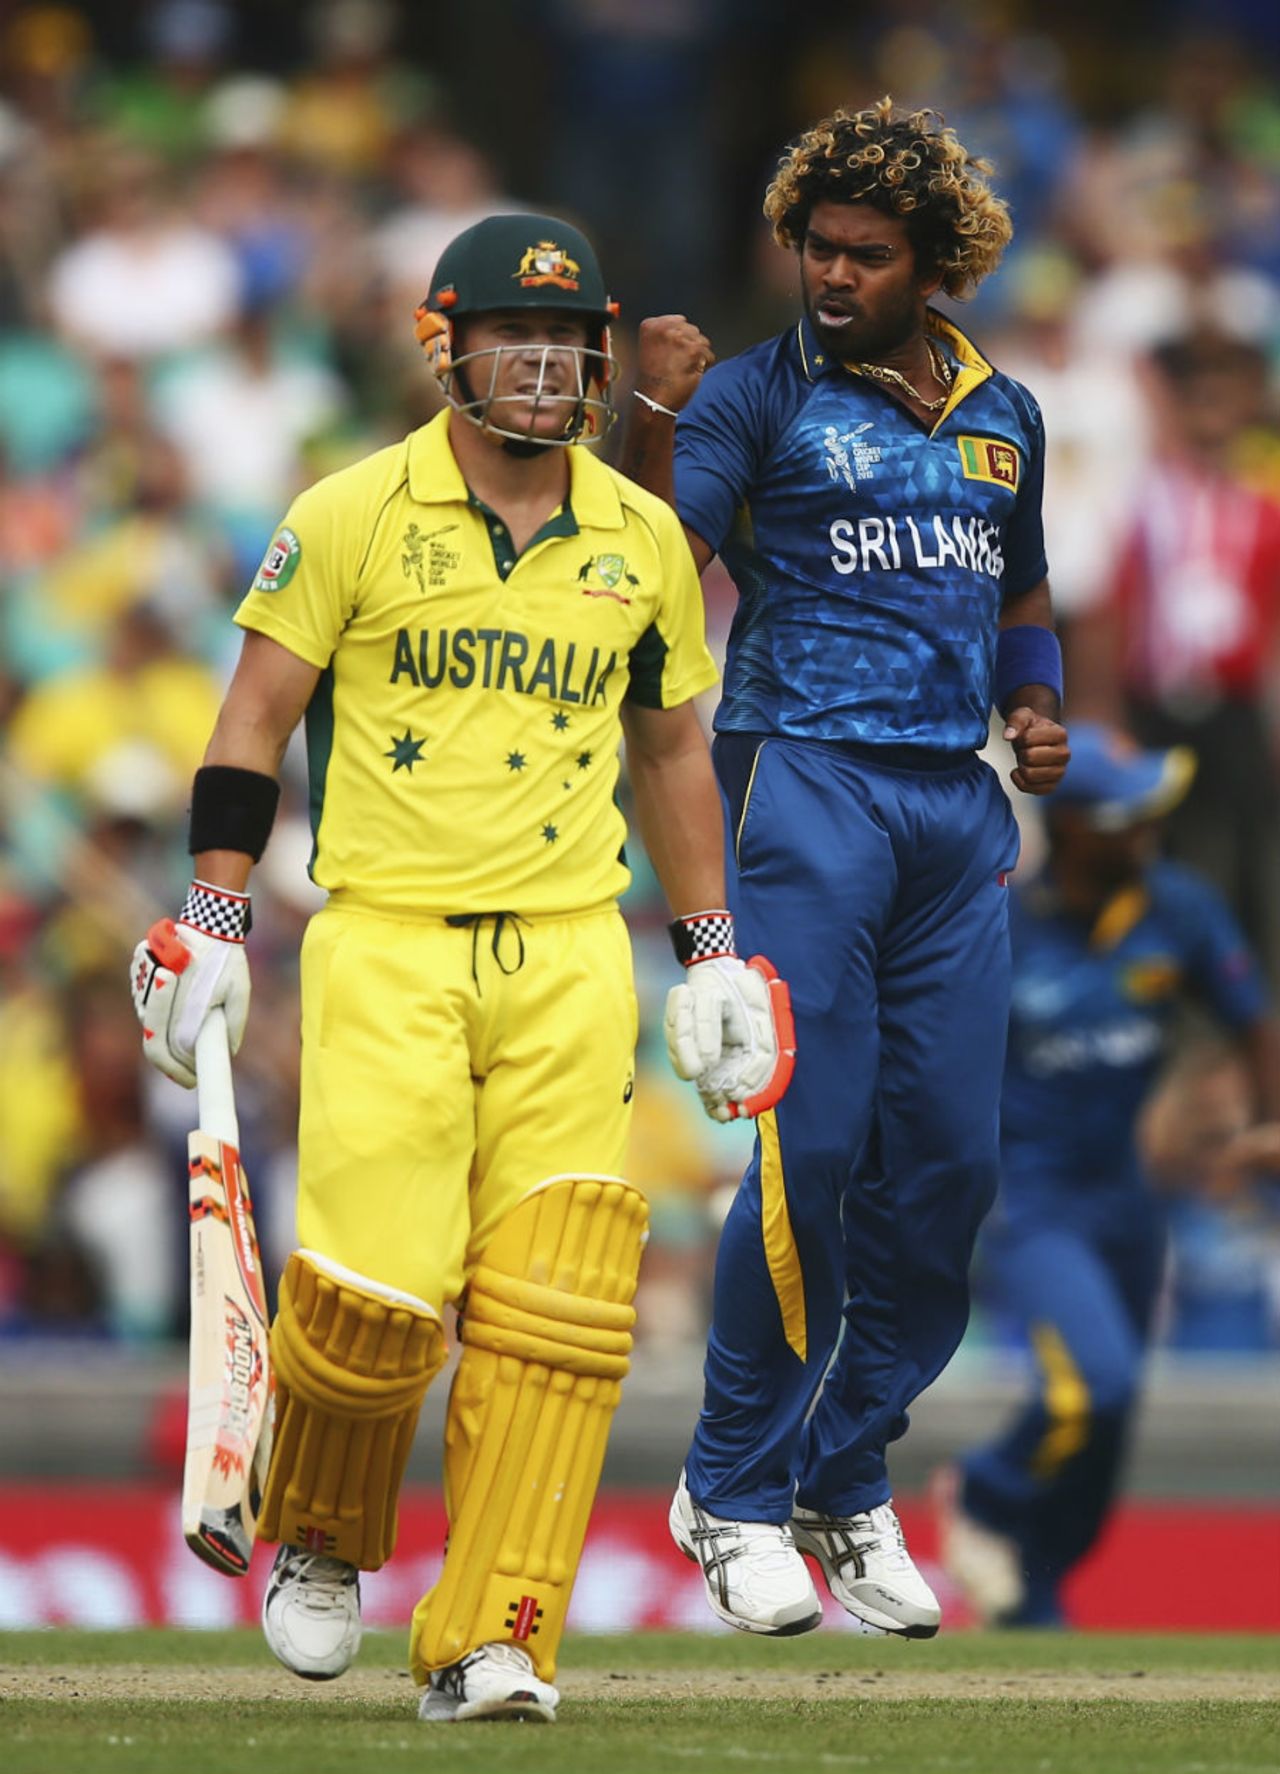 Lasith Malinga gives David Warner a send off, Australia v Sri Lanka, World Cup 2015, Group A, Sydney, March 8, 2015